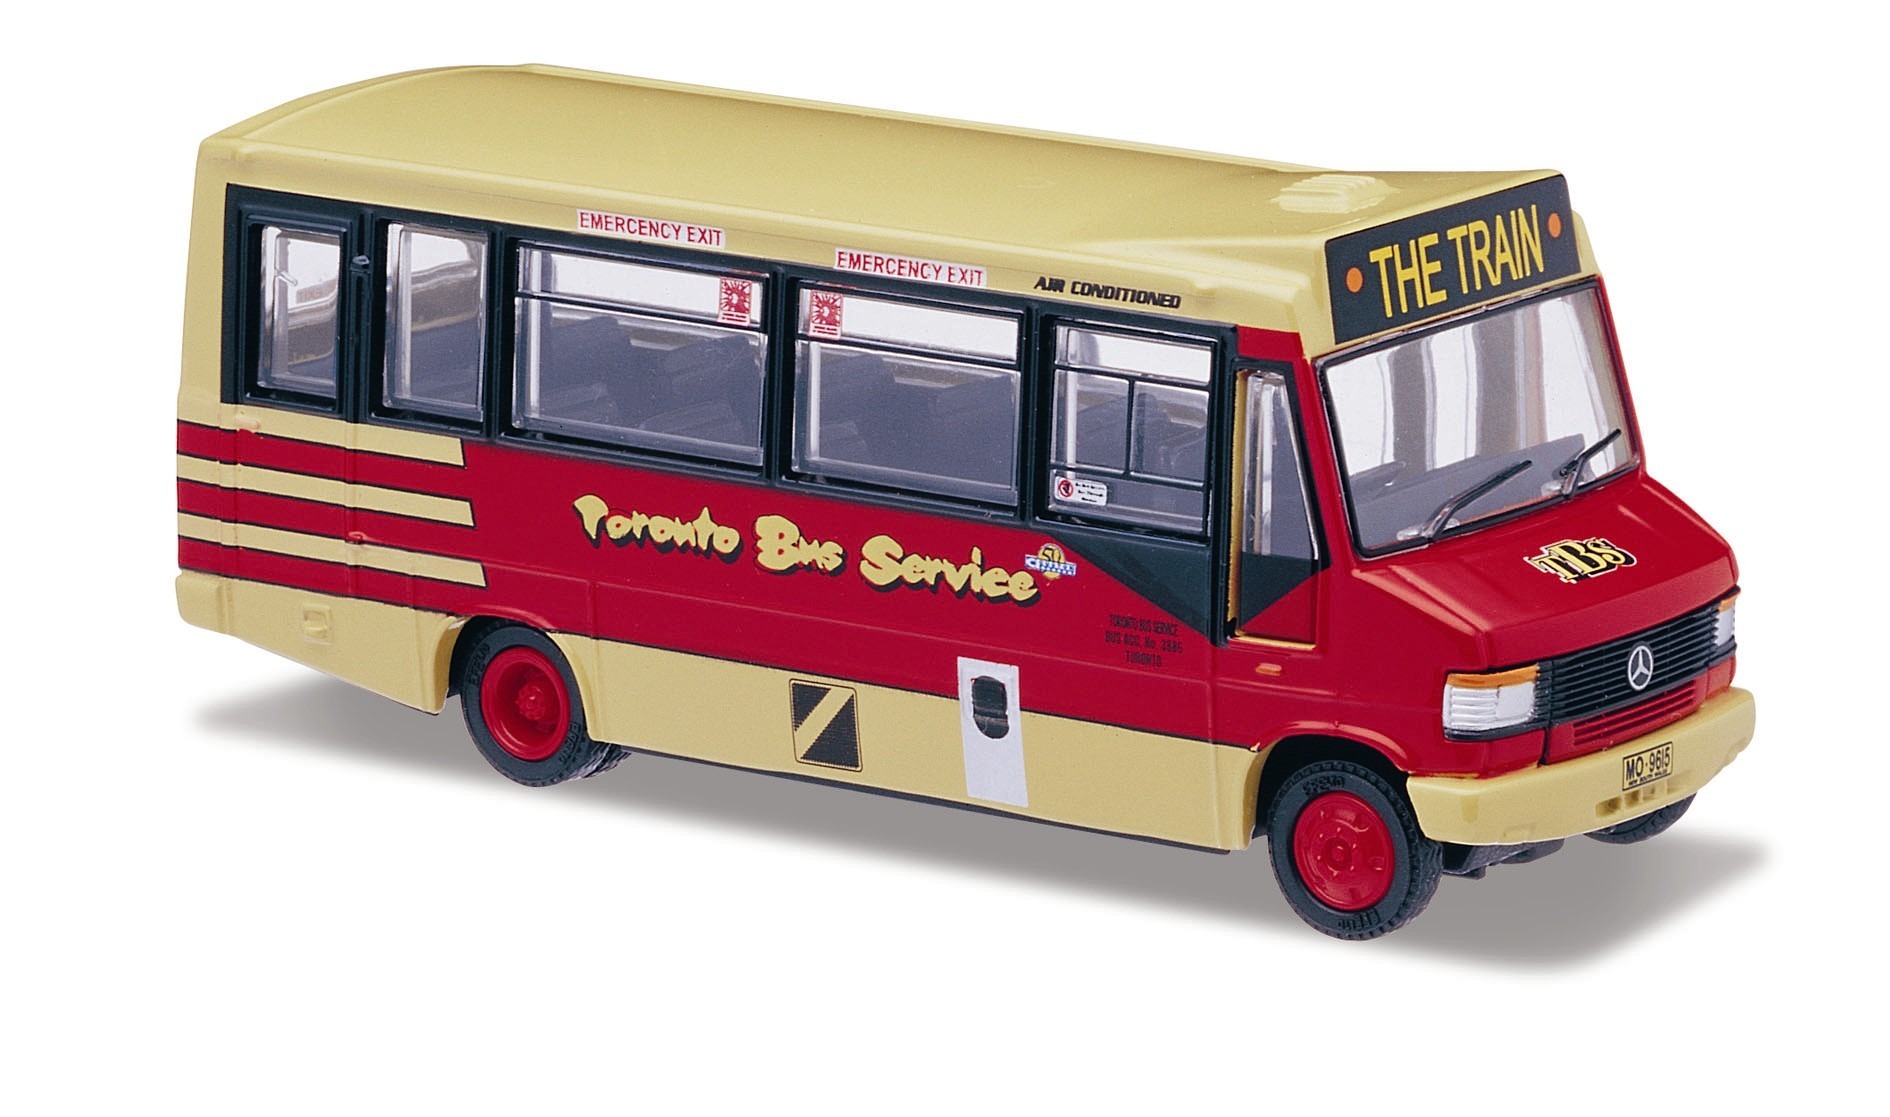 Mercedes Minibus – ‘The Train’ -Toronto Bus Service